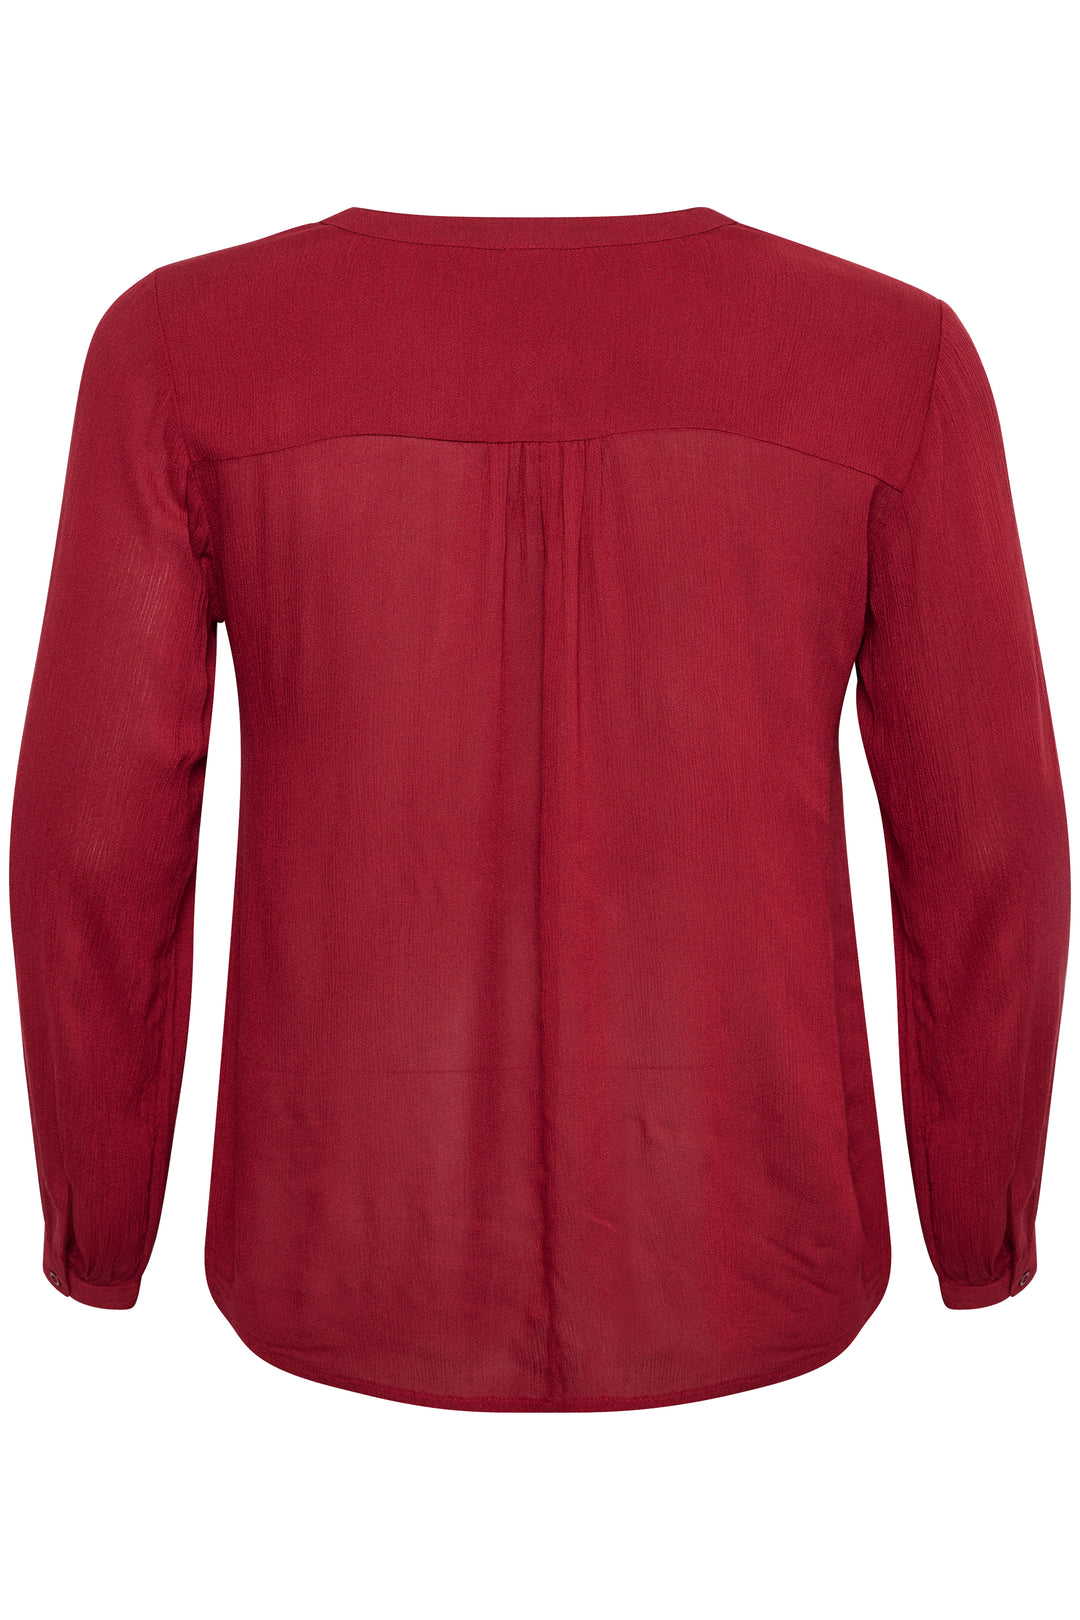 tijdloze rode blouse van ecovero viscose